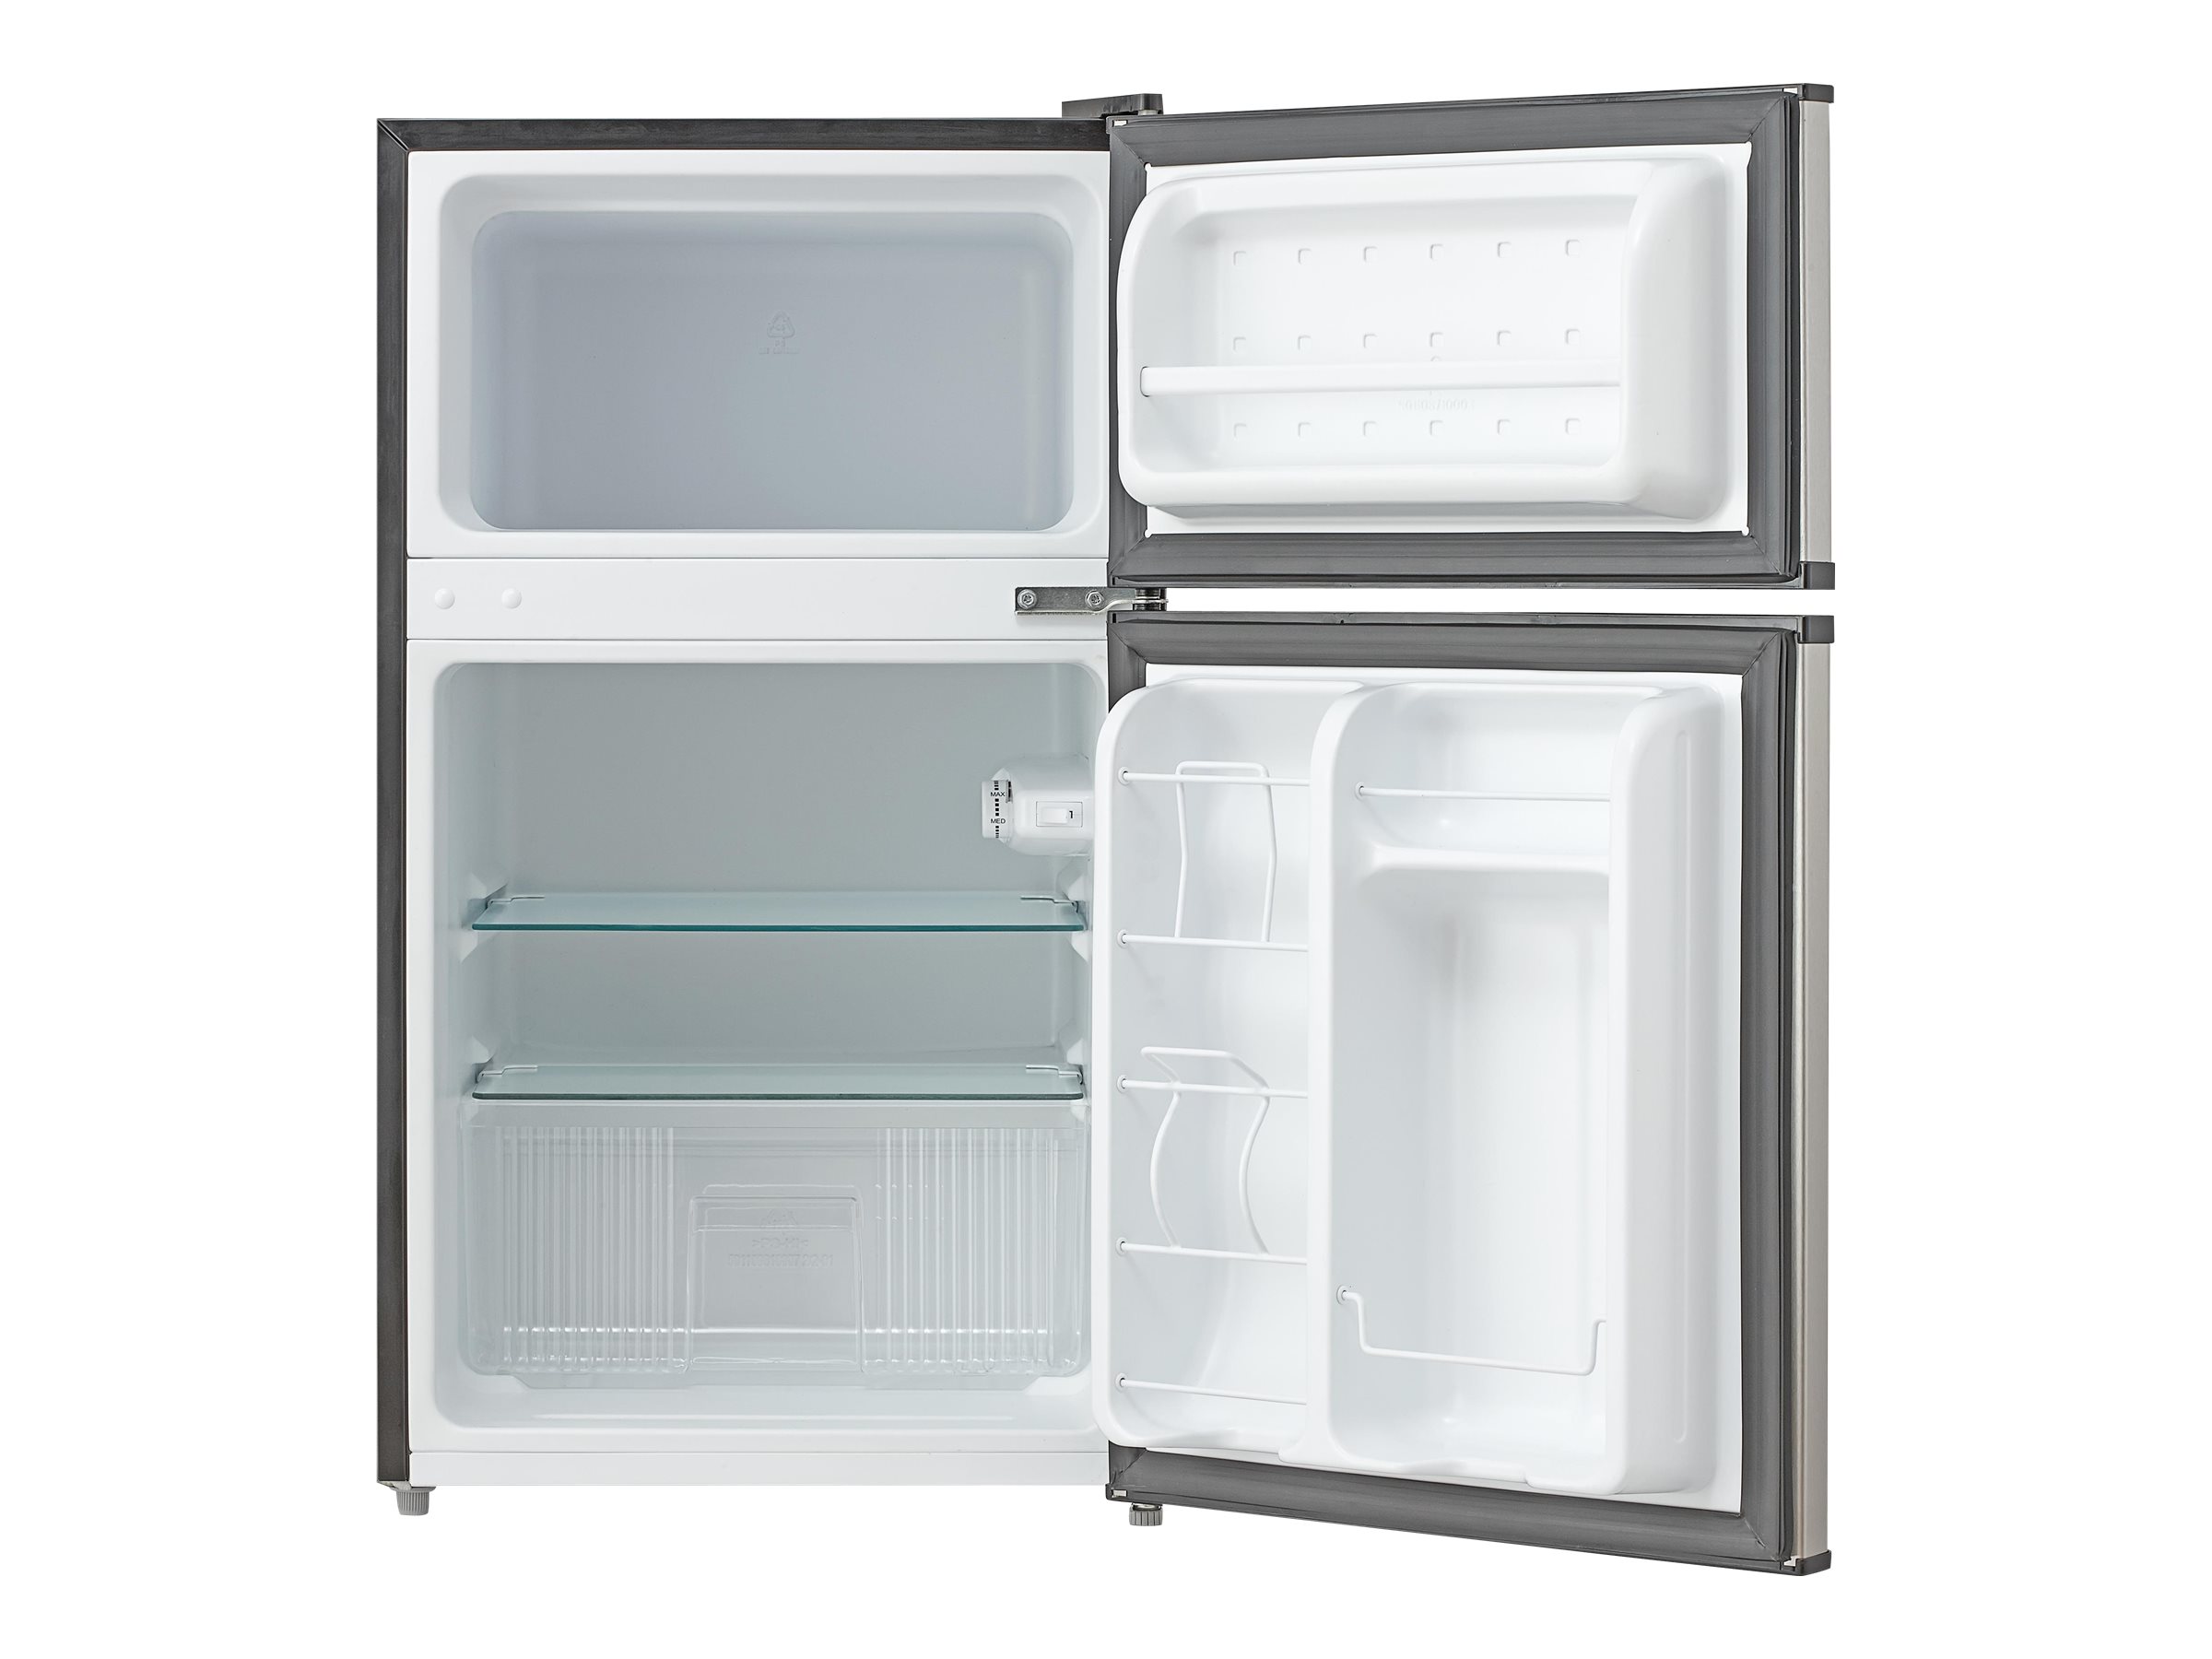 Whynter MRF-340DS Refrigerator Freezer Freestanding Width 19 in, Depth 23 in, Height 33 in Top-Freezer, Stainless Steel - image 4 of 6